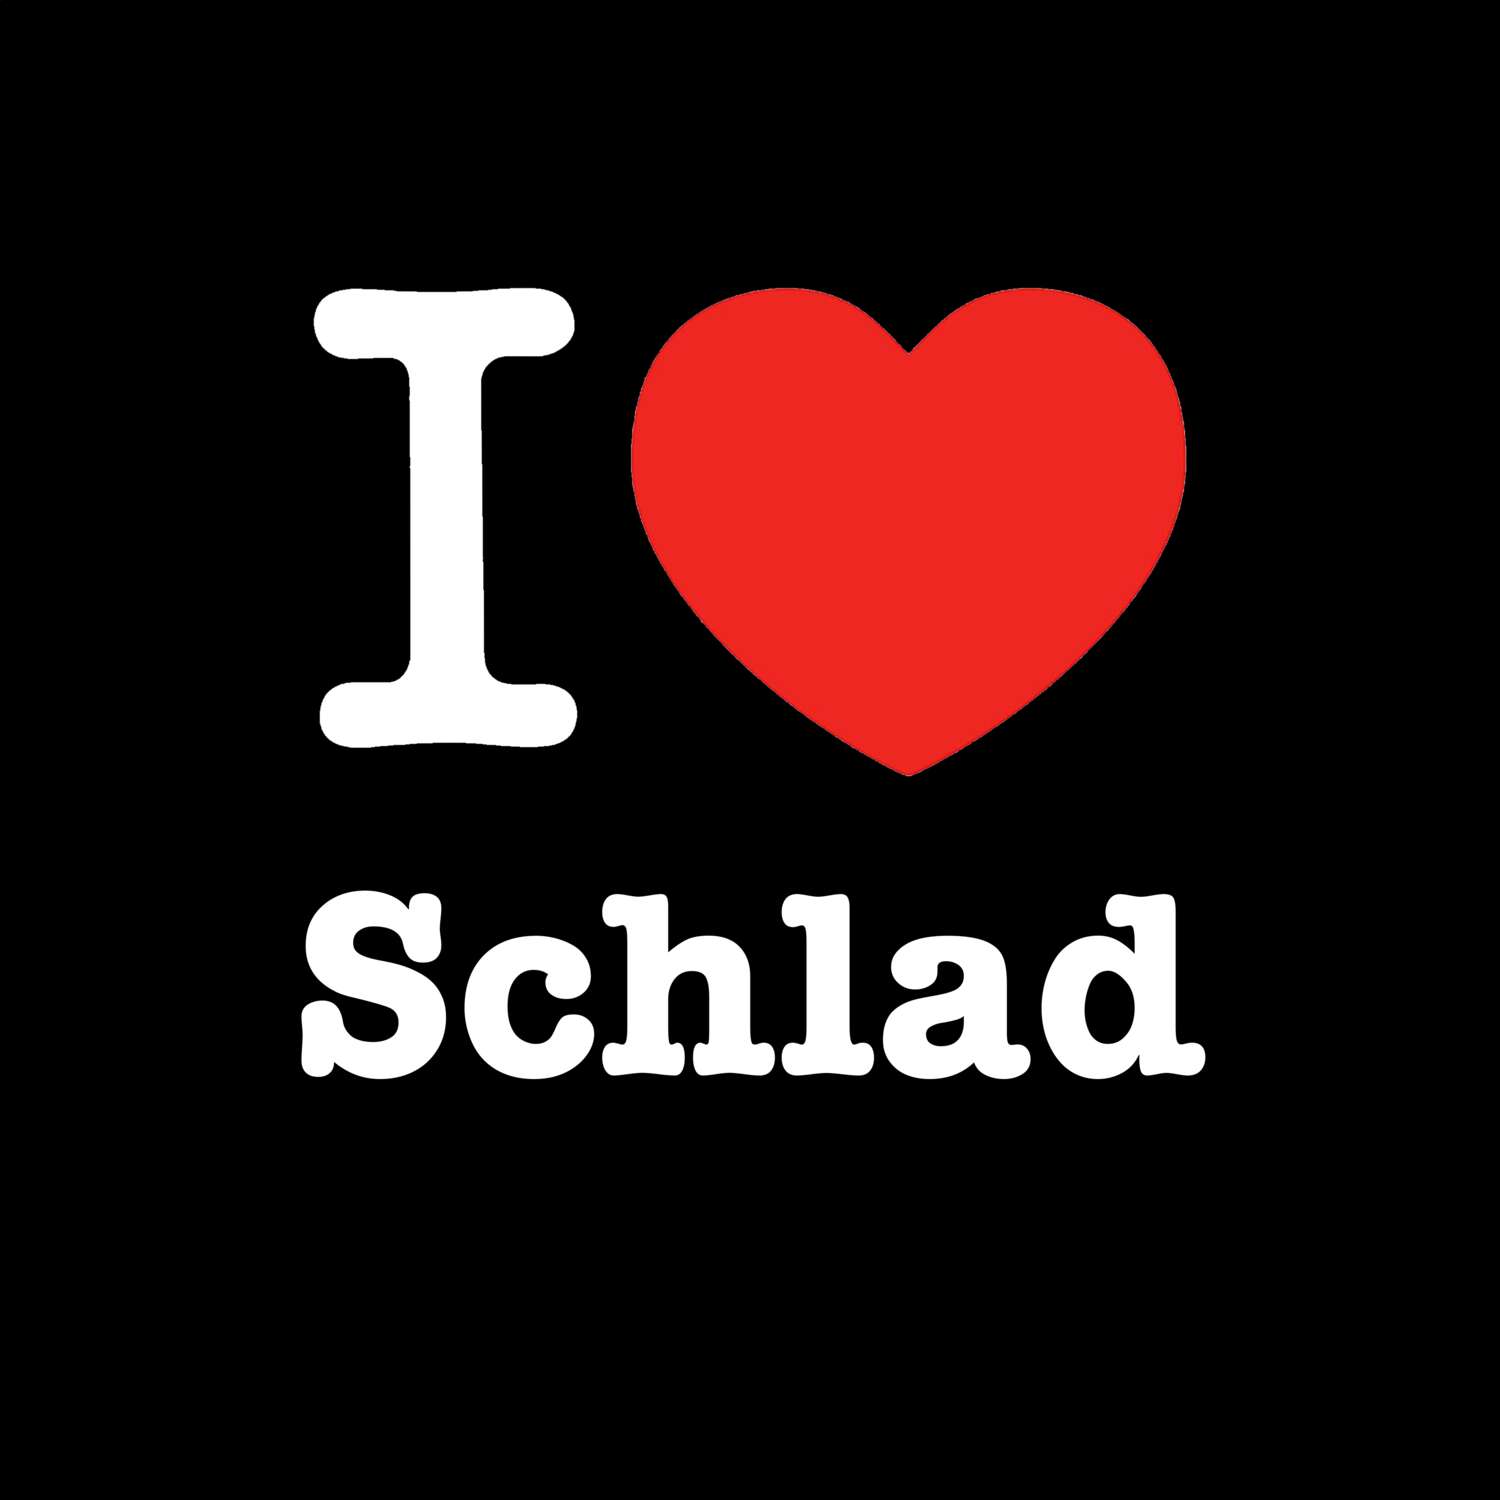 Schlad T-Shirt »I love«